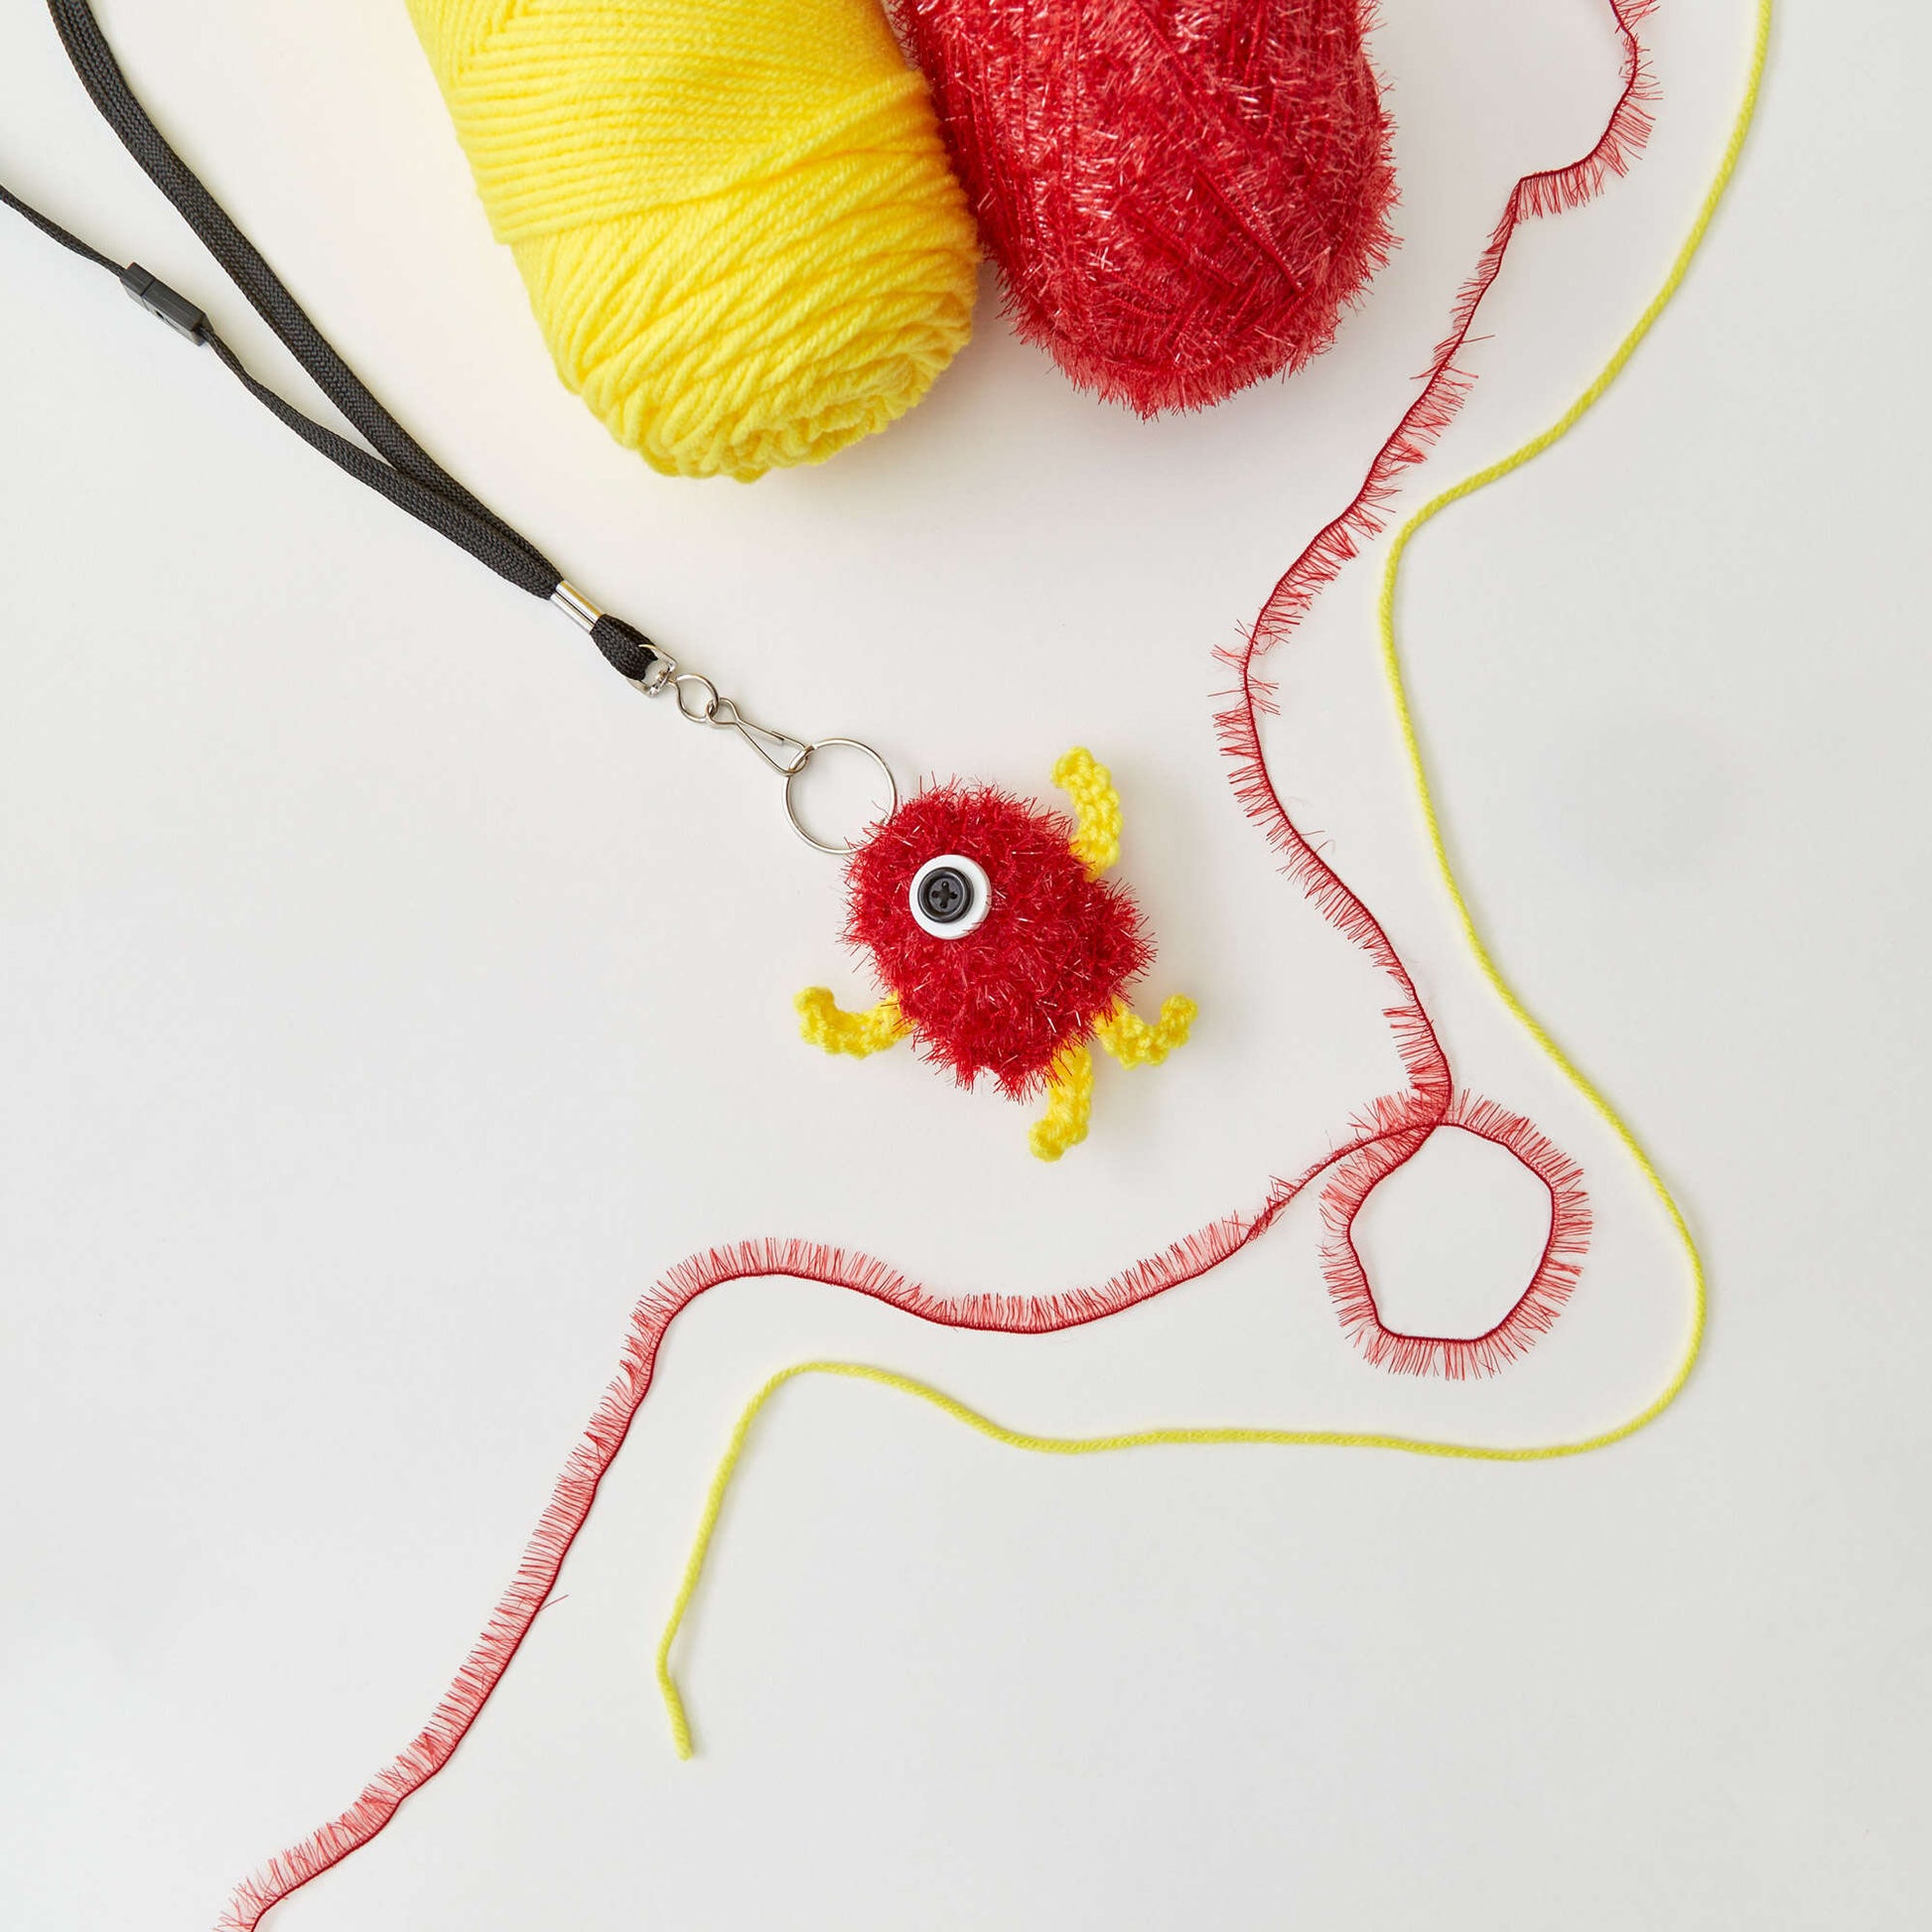 Free Red Heart Beginner Knit Monster Key Ring Pattern